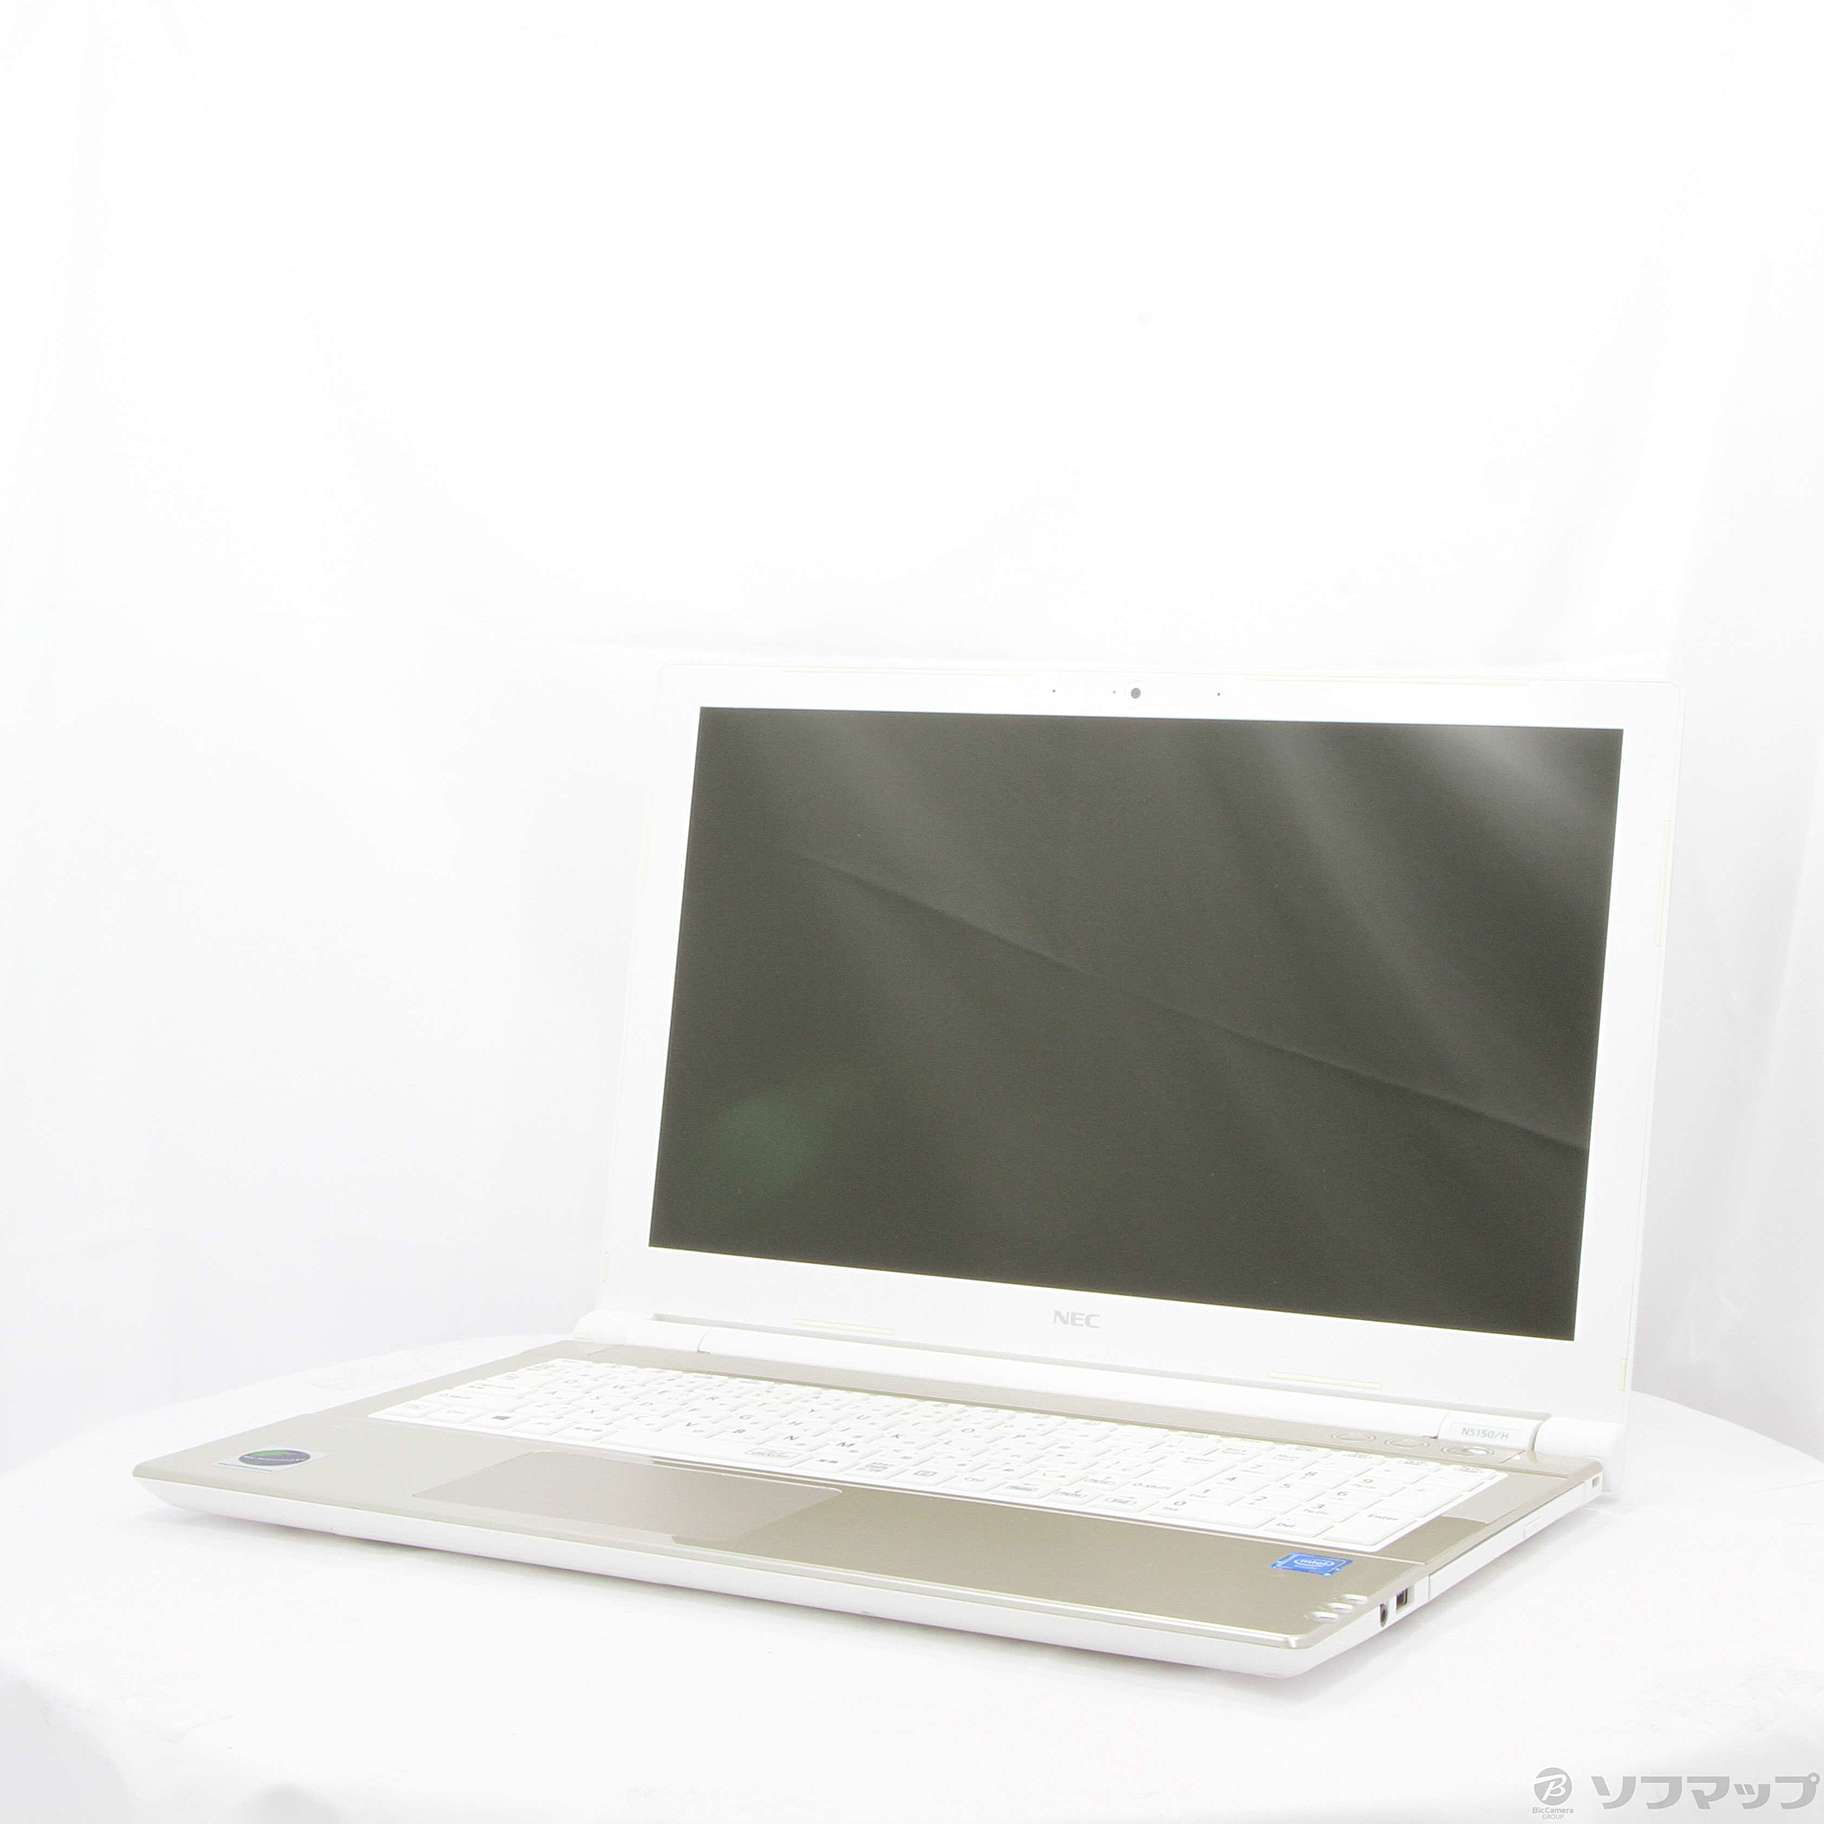 LaVie Note Standard PC-NS150HAG シャンパンゴールド 〔NEC Refreshed PC〕 〔Windows 10〕  ≪メーカー保証あり≫